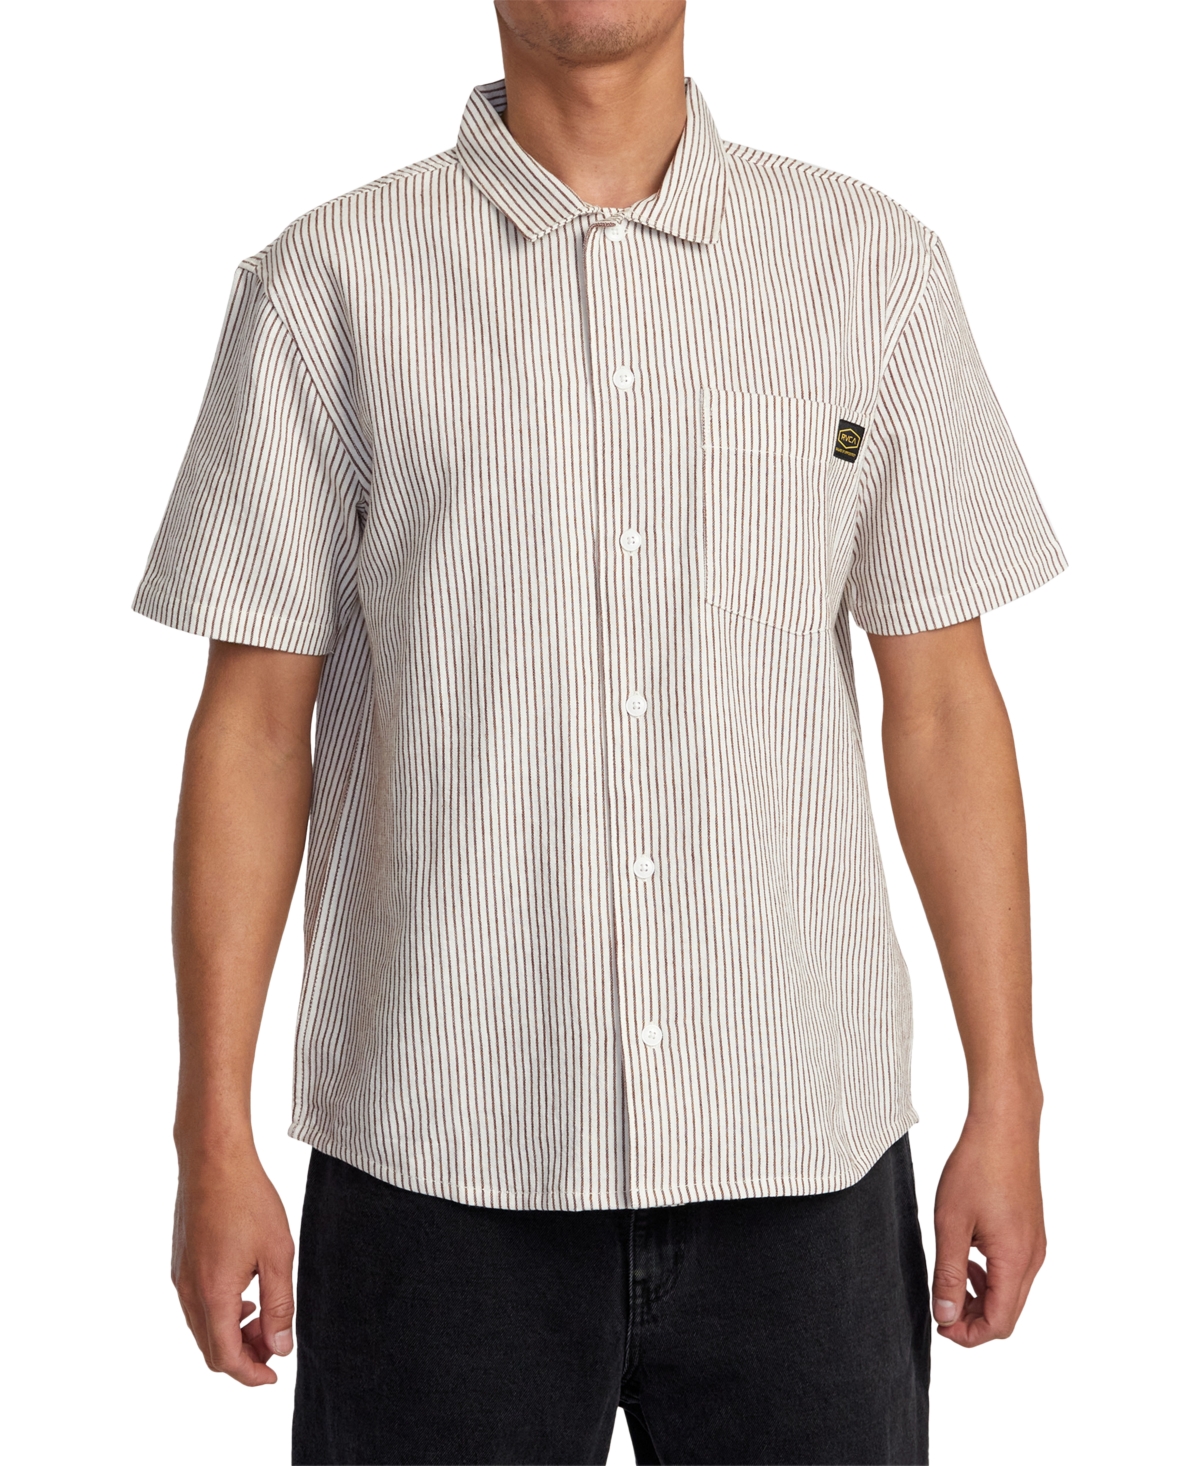 Men's Dayshift Stripe Ii Short Sleeve Shirt - Chambray